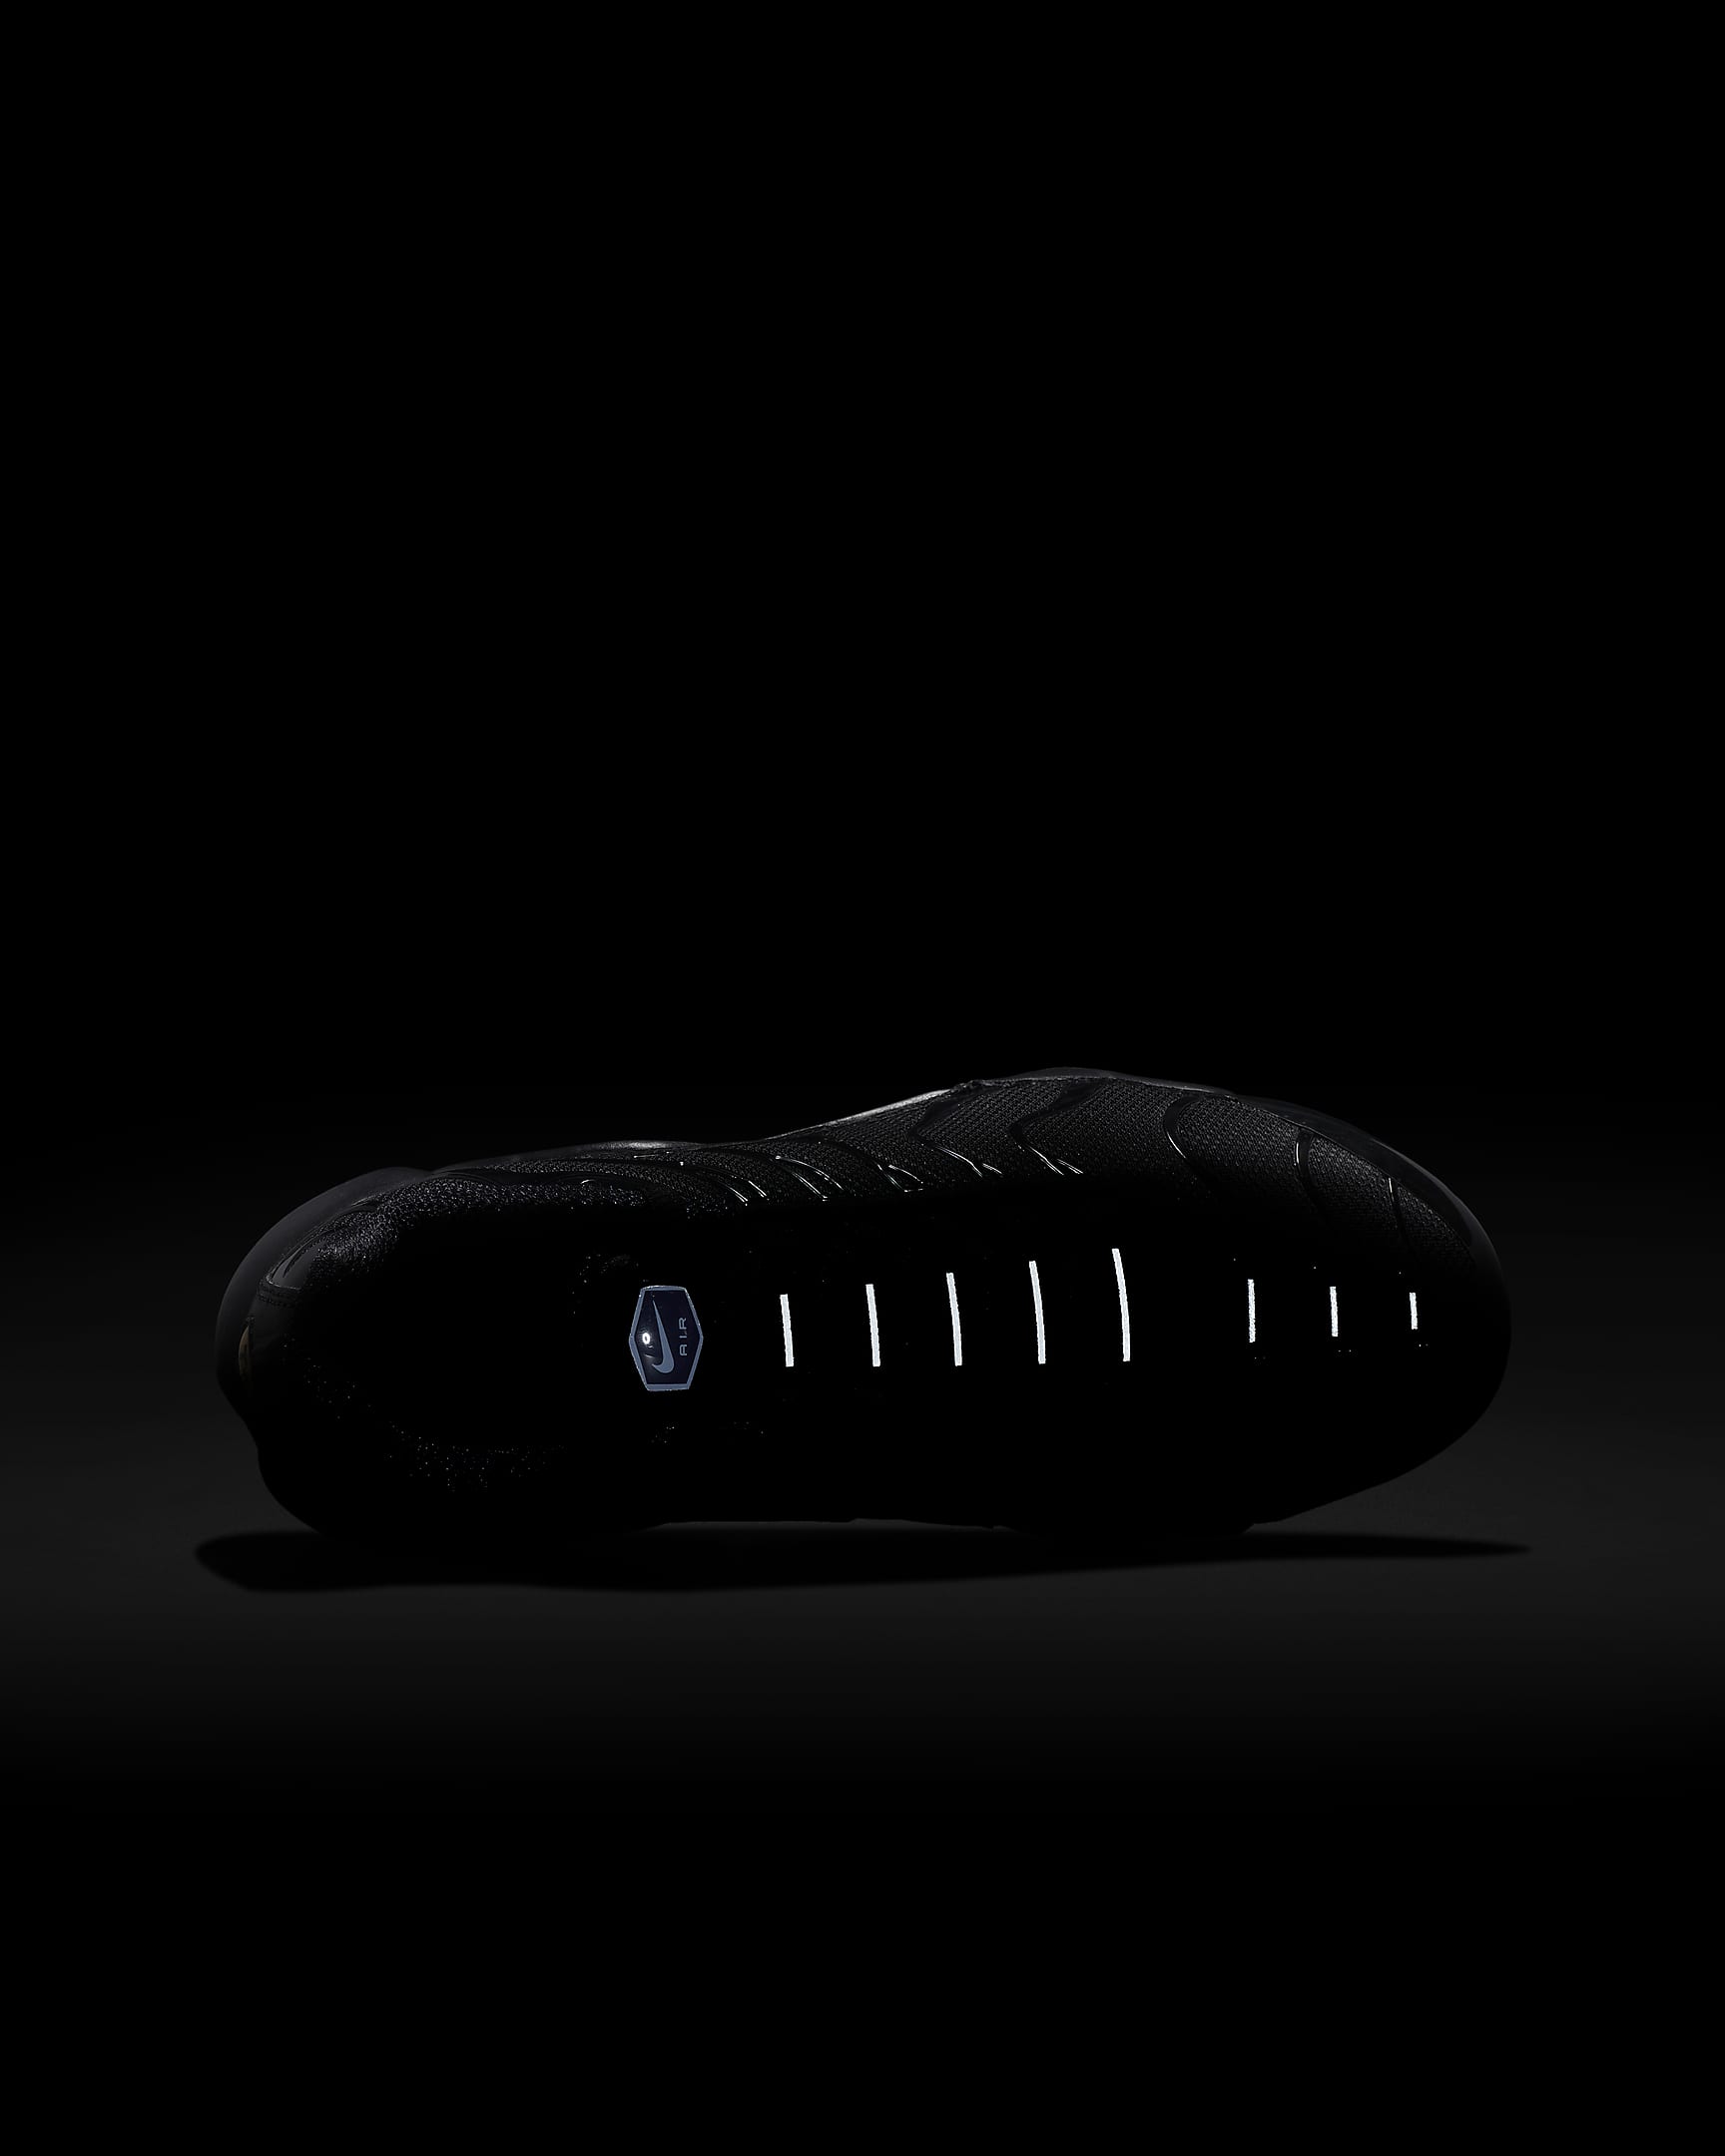 Chaussure Nike Air Max Plus pour ado - Noir/Noir/Noir